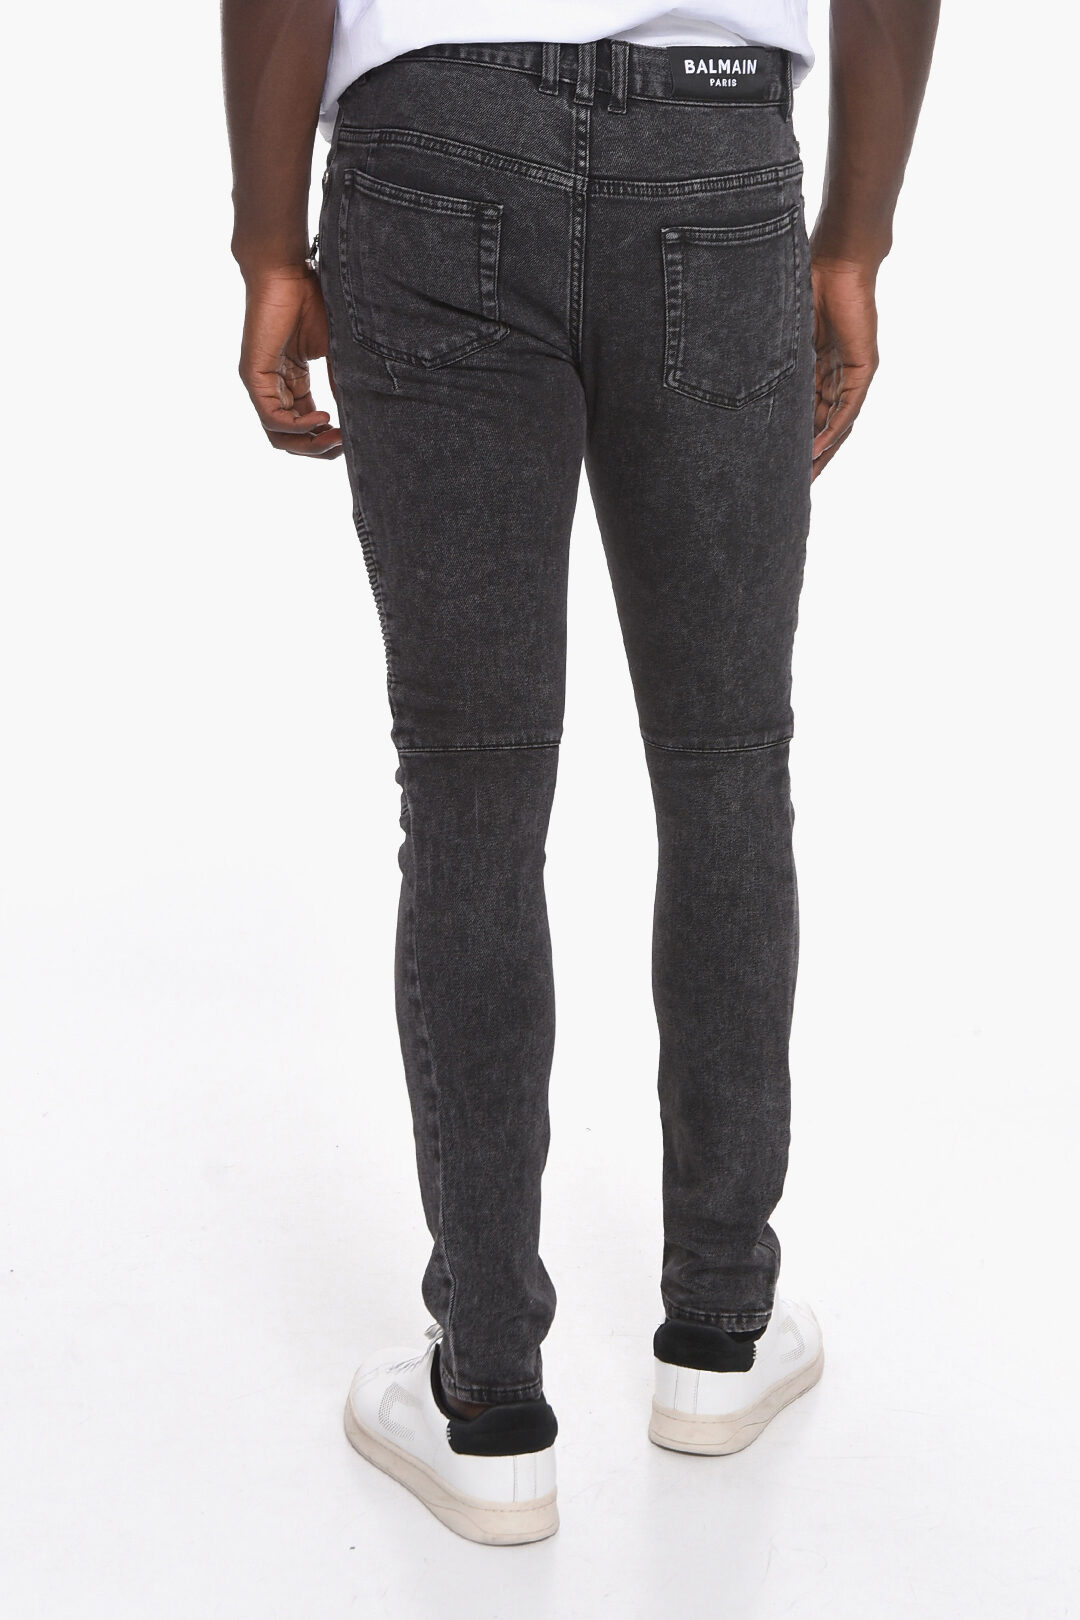 Balmain Printed Cotton Pin Cap - IetpShops Italy - Black Jeans with  stitching details Balmain